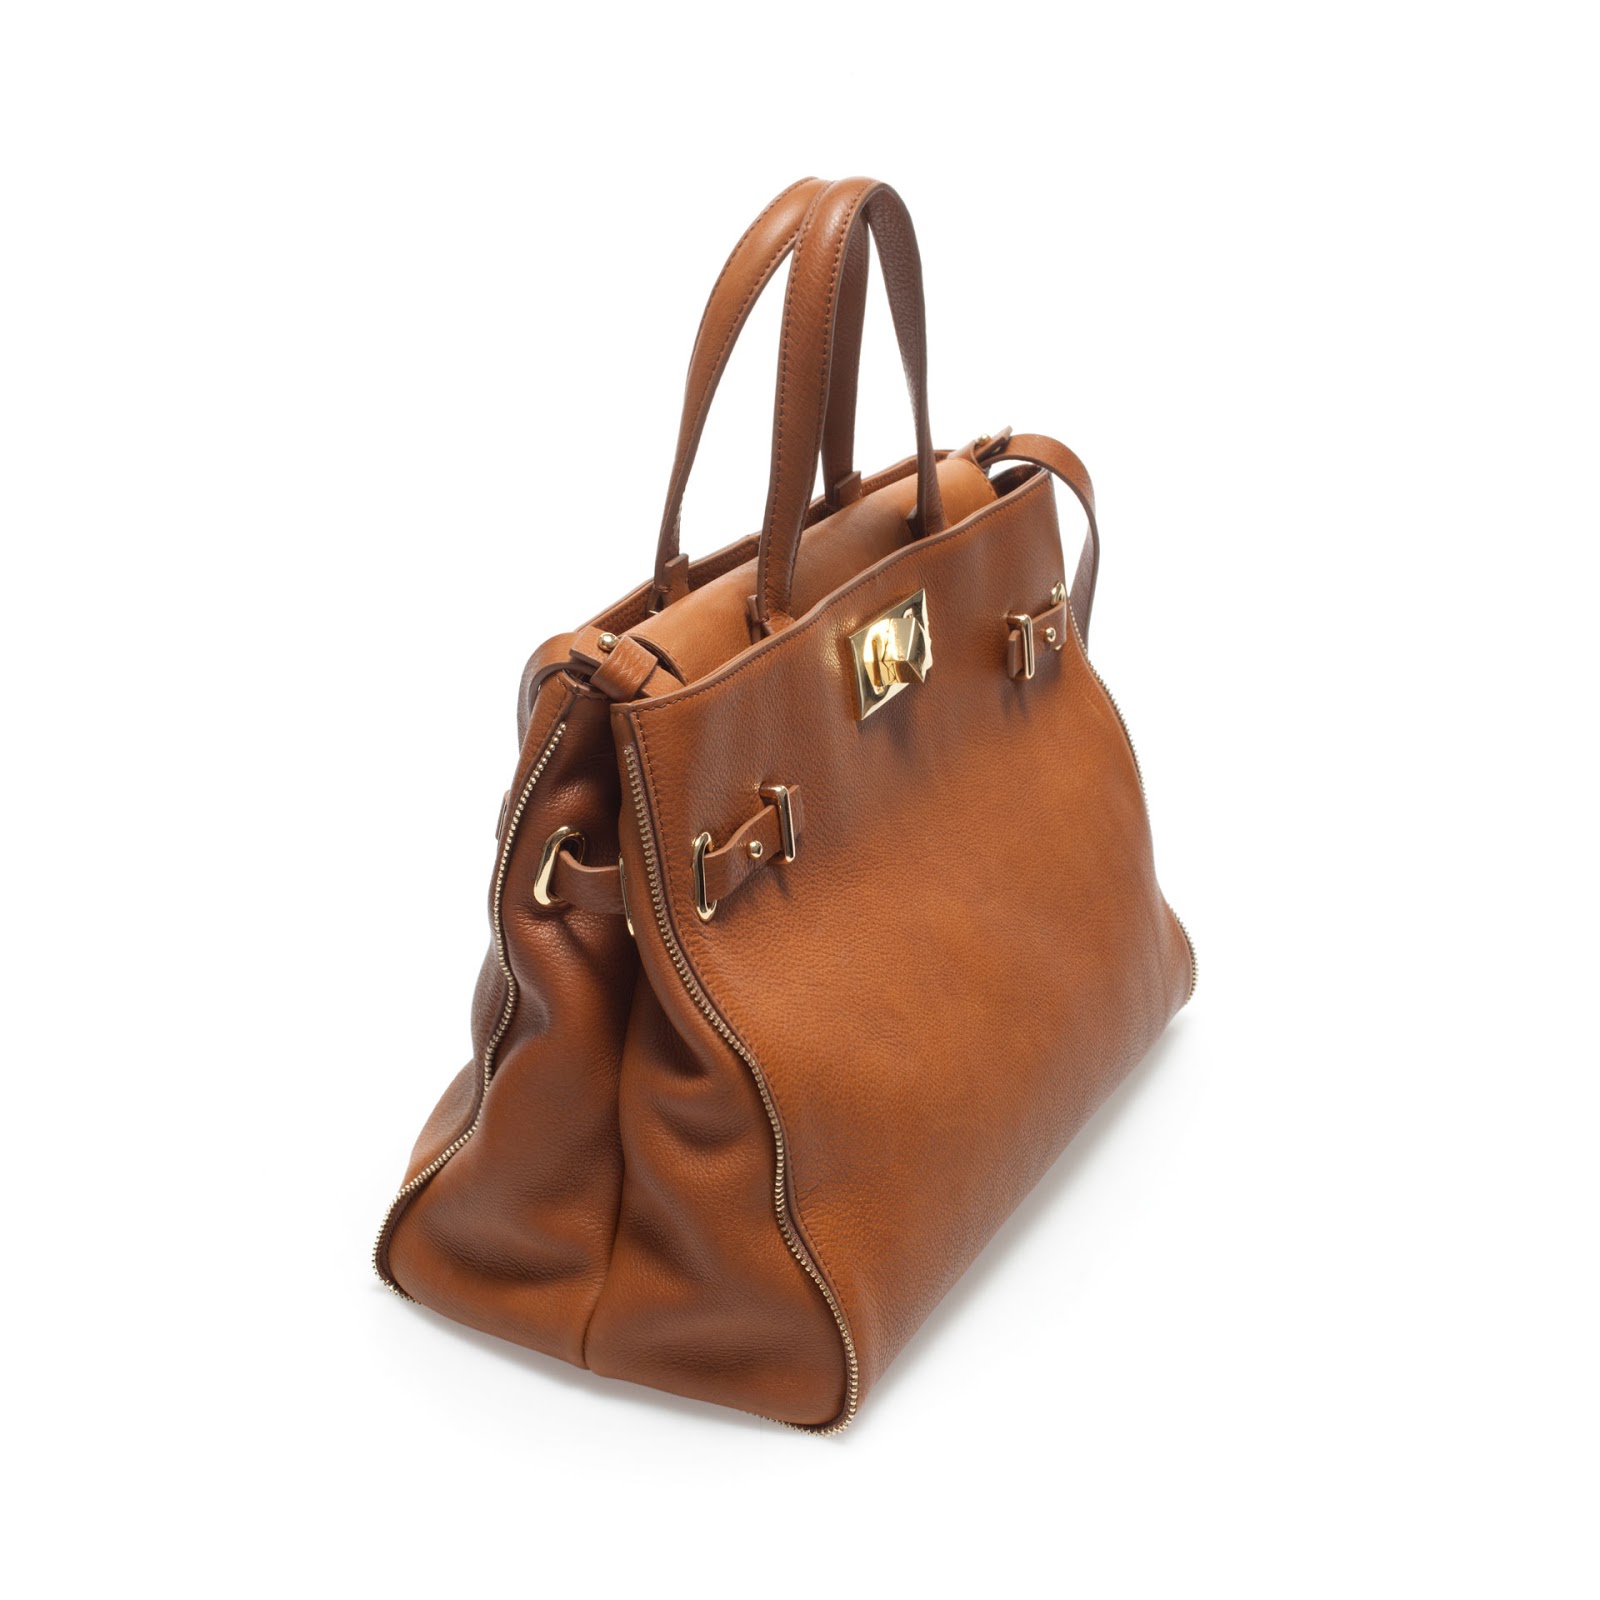 London Personal Shopper: Just Landed from Zara: New Office City Handbag